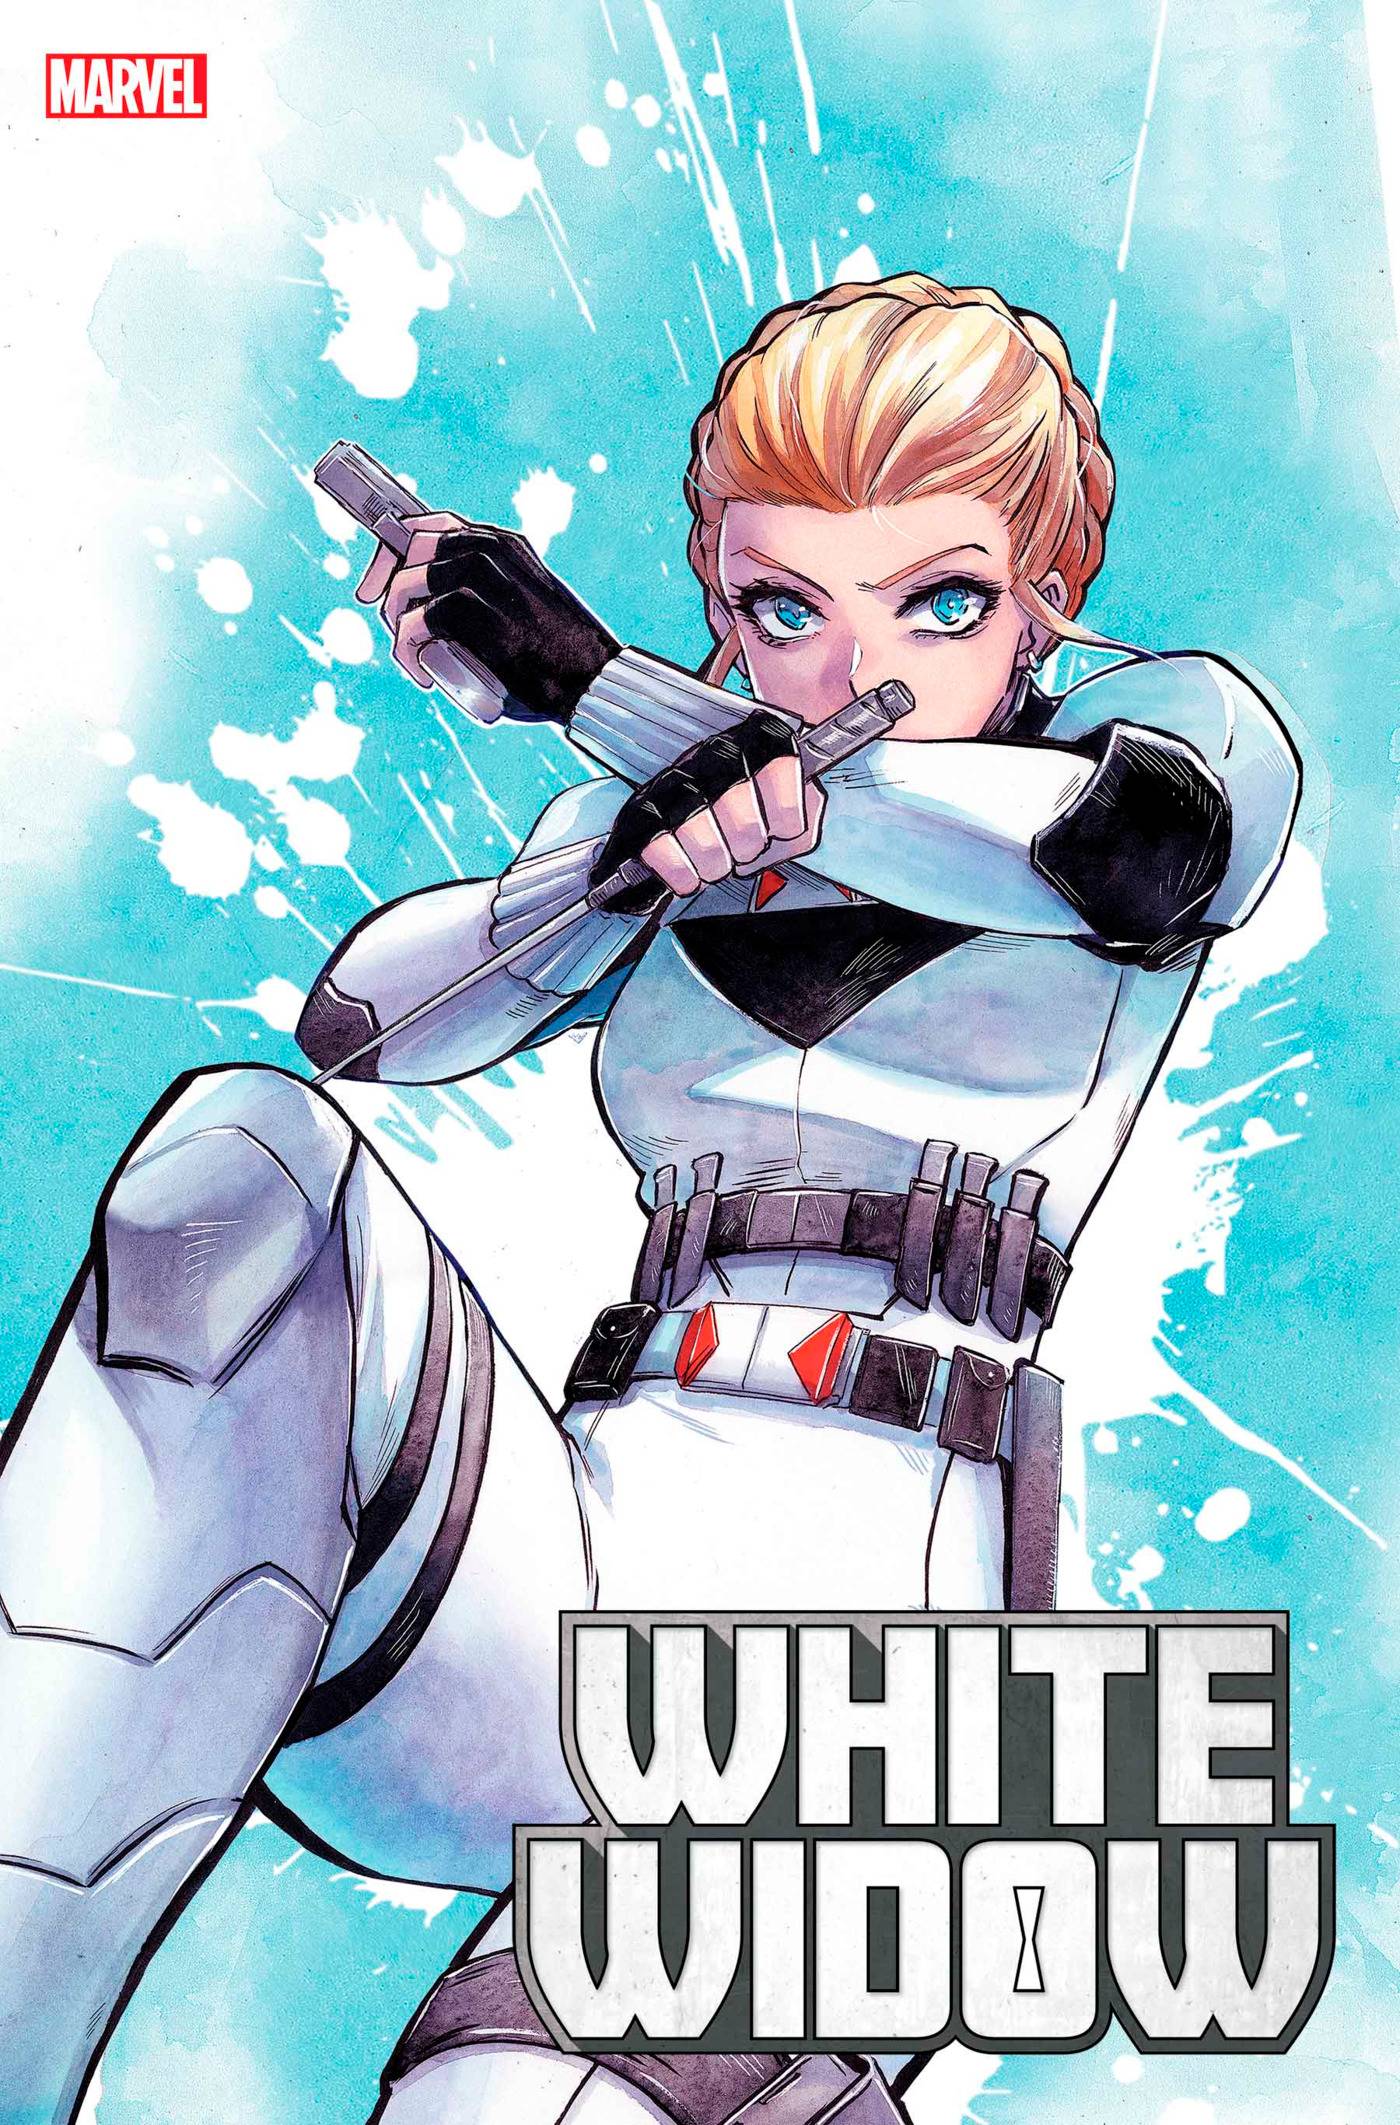 WHITE WIDOW #3 SAOWEE VAR